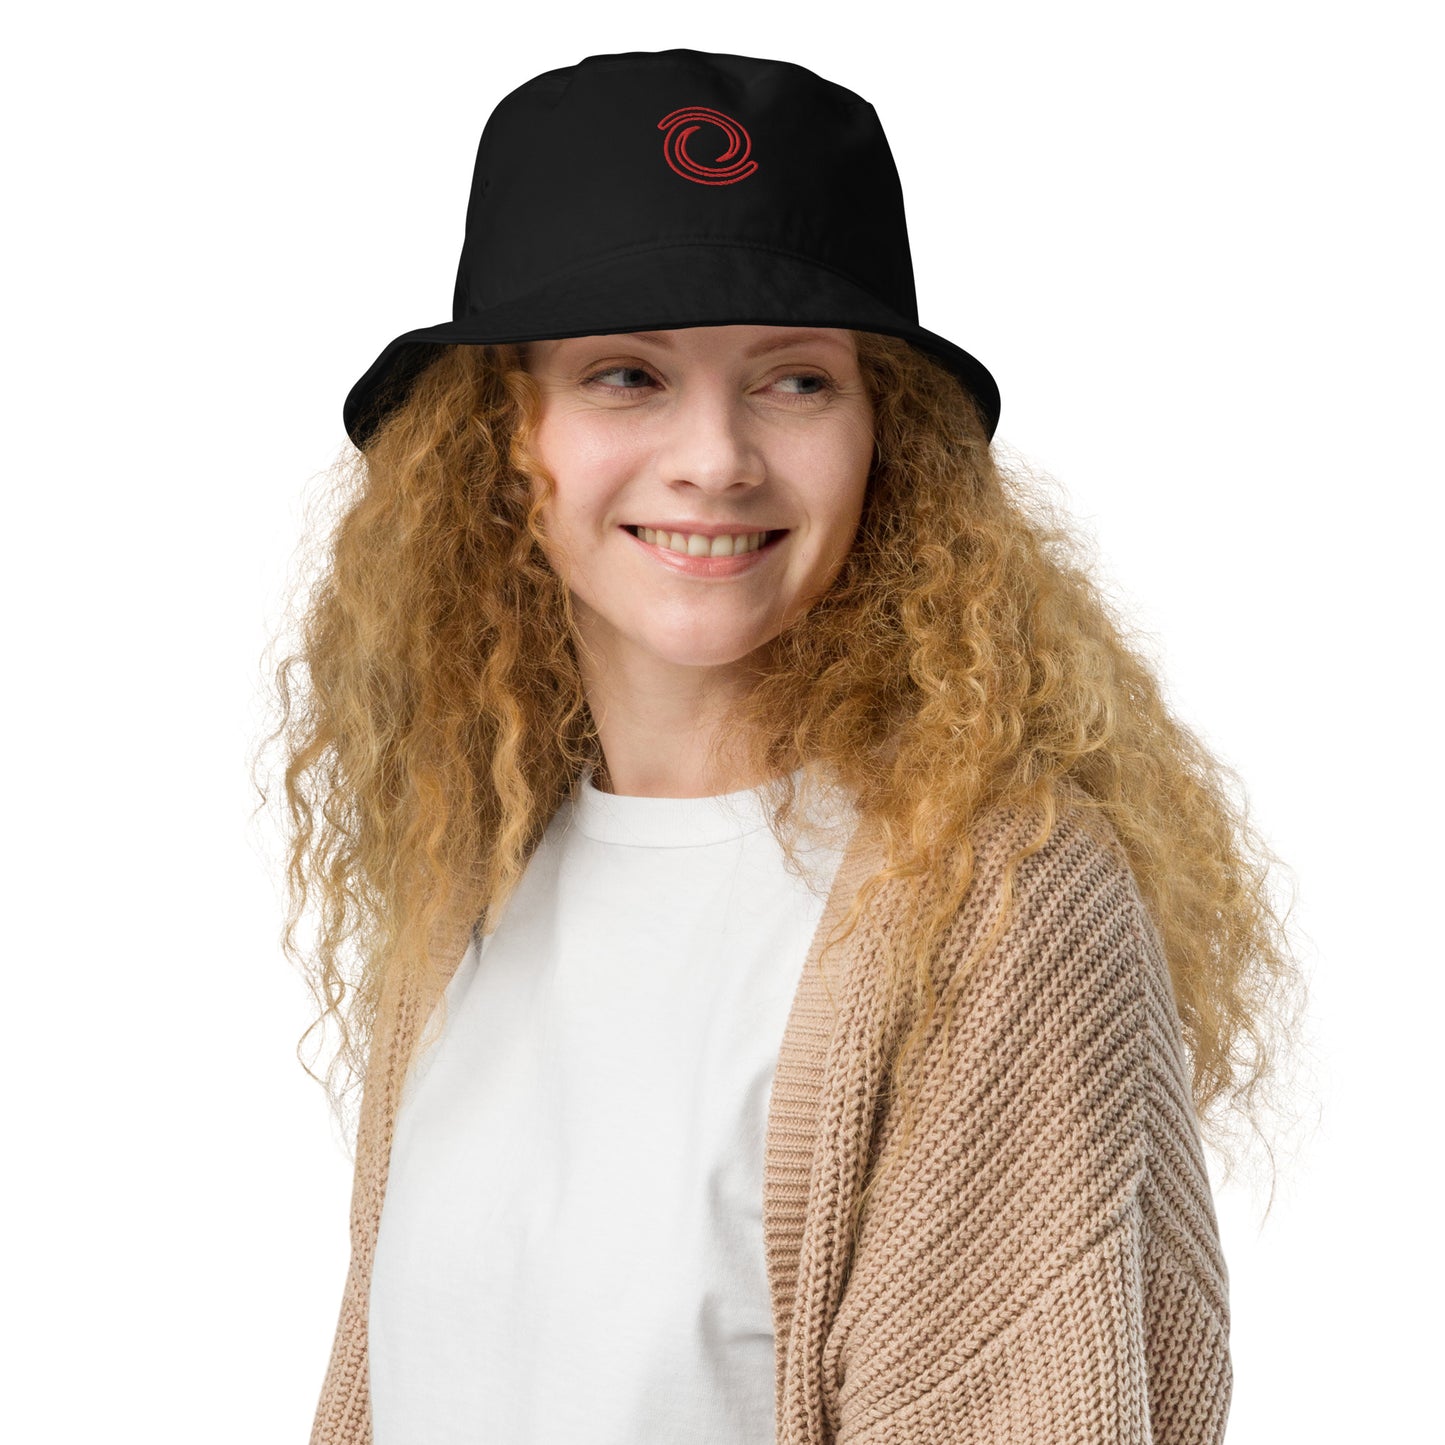 Hurricane Embroidered Organic Bucket Hat Unisex Black Red